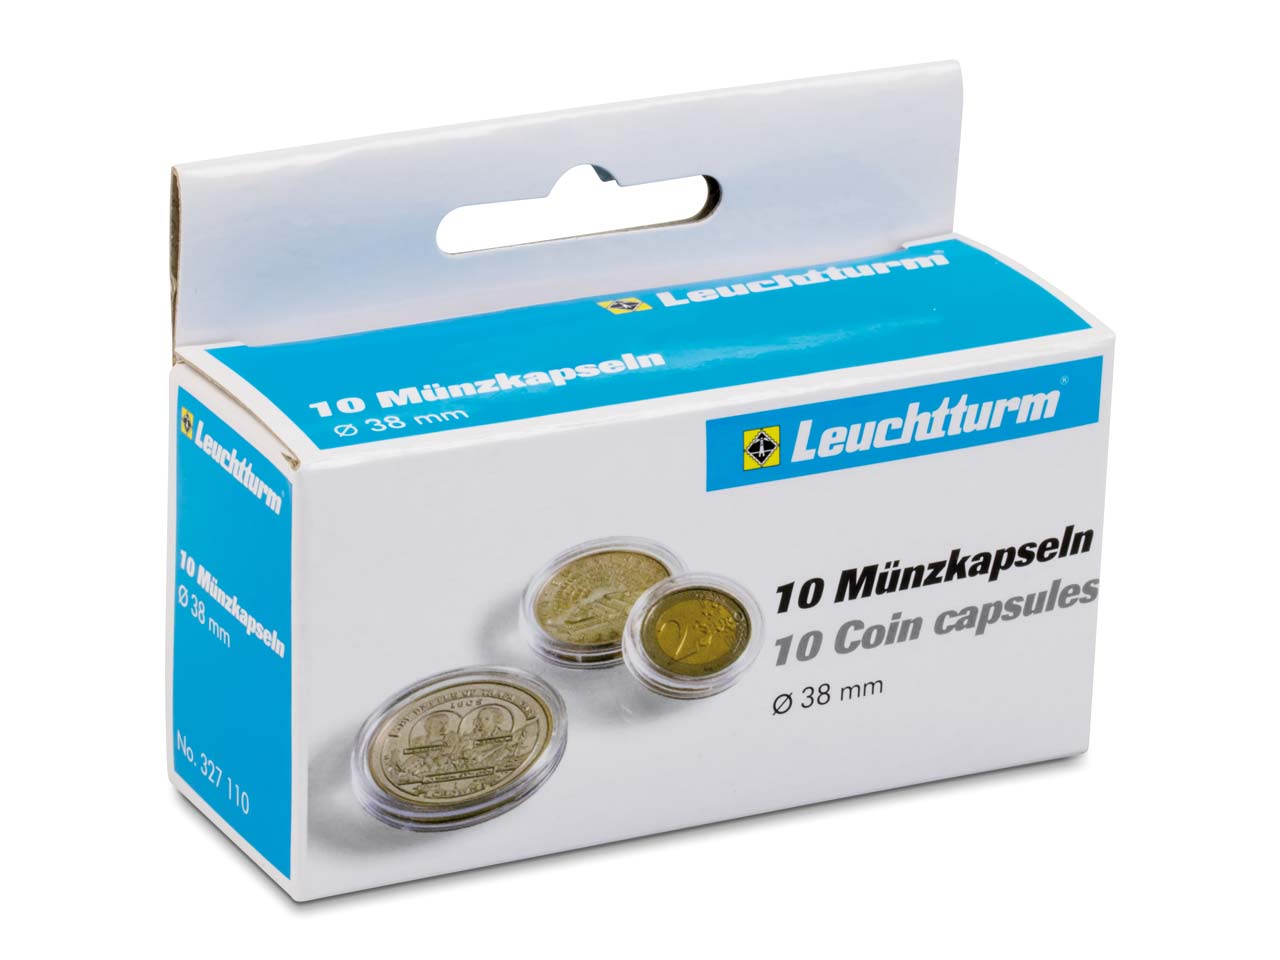 Leuchtturm Ultra Coin Capsules Intercept 35 mm Pack of 10 